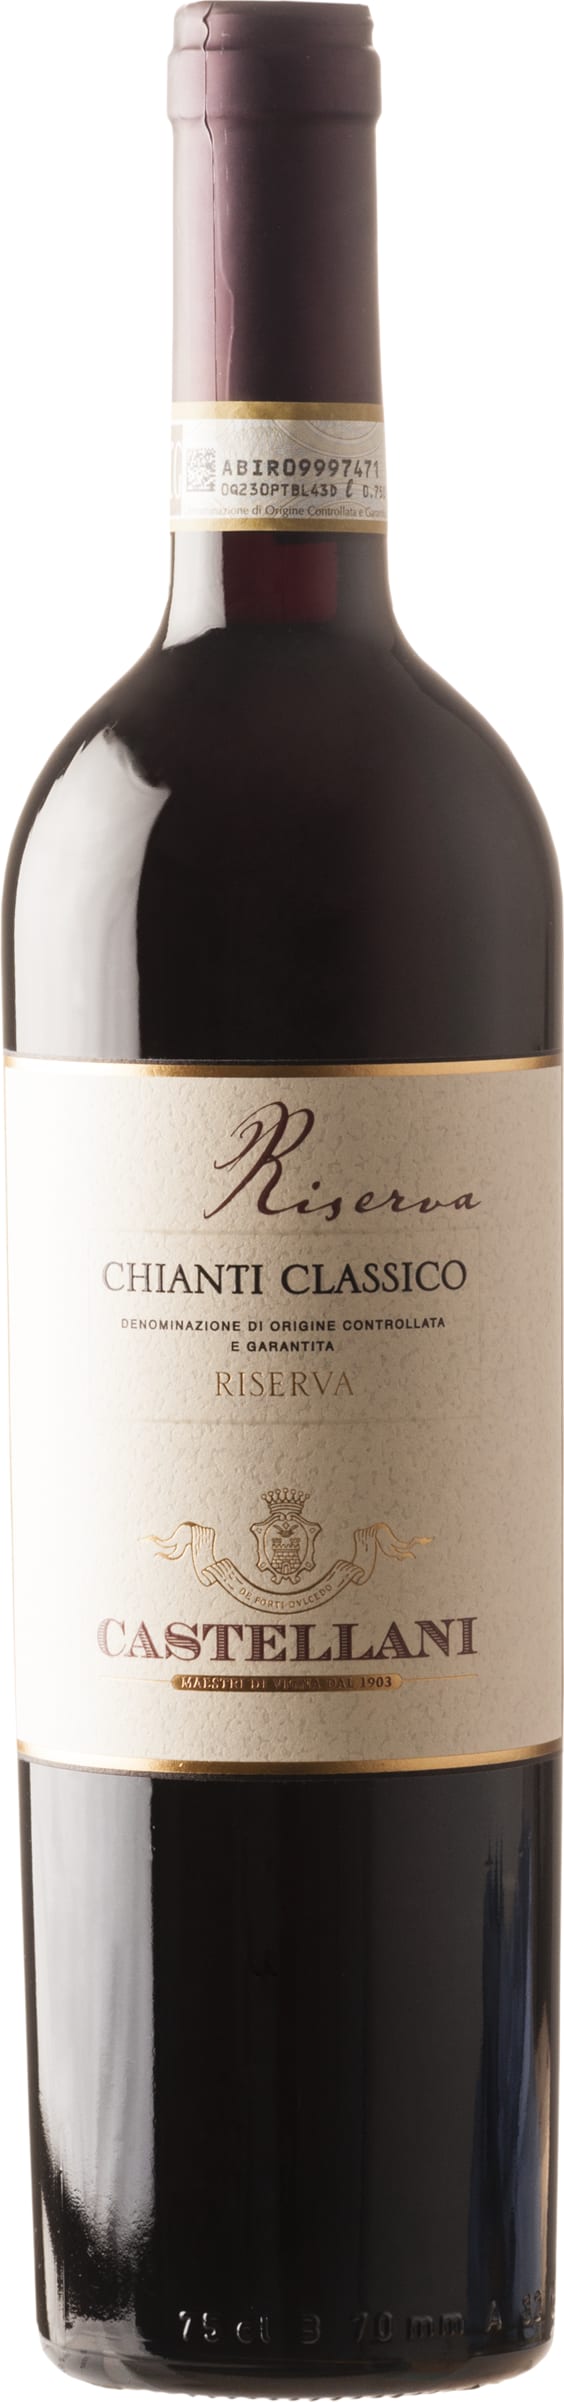 Castellani Chianti Riserva DOCG 2019 75cl - Buy Castellani Wines from GREAT WINES DIRECT wine shop